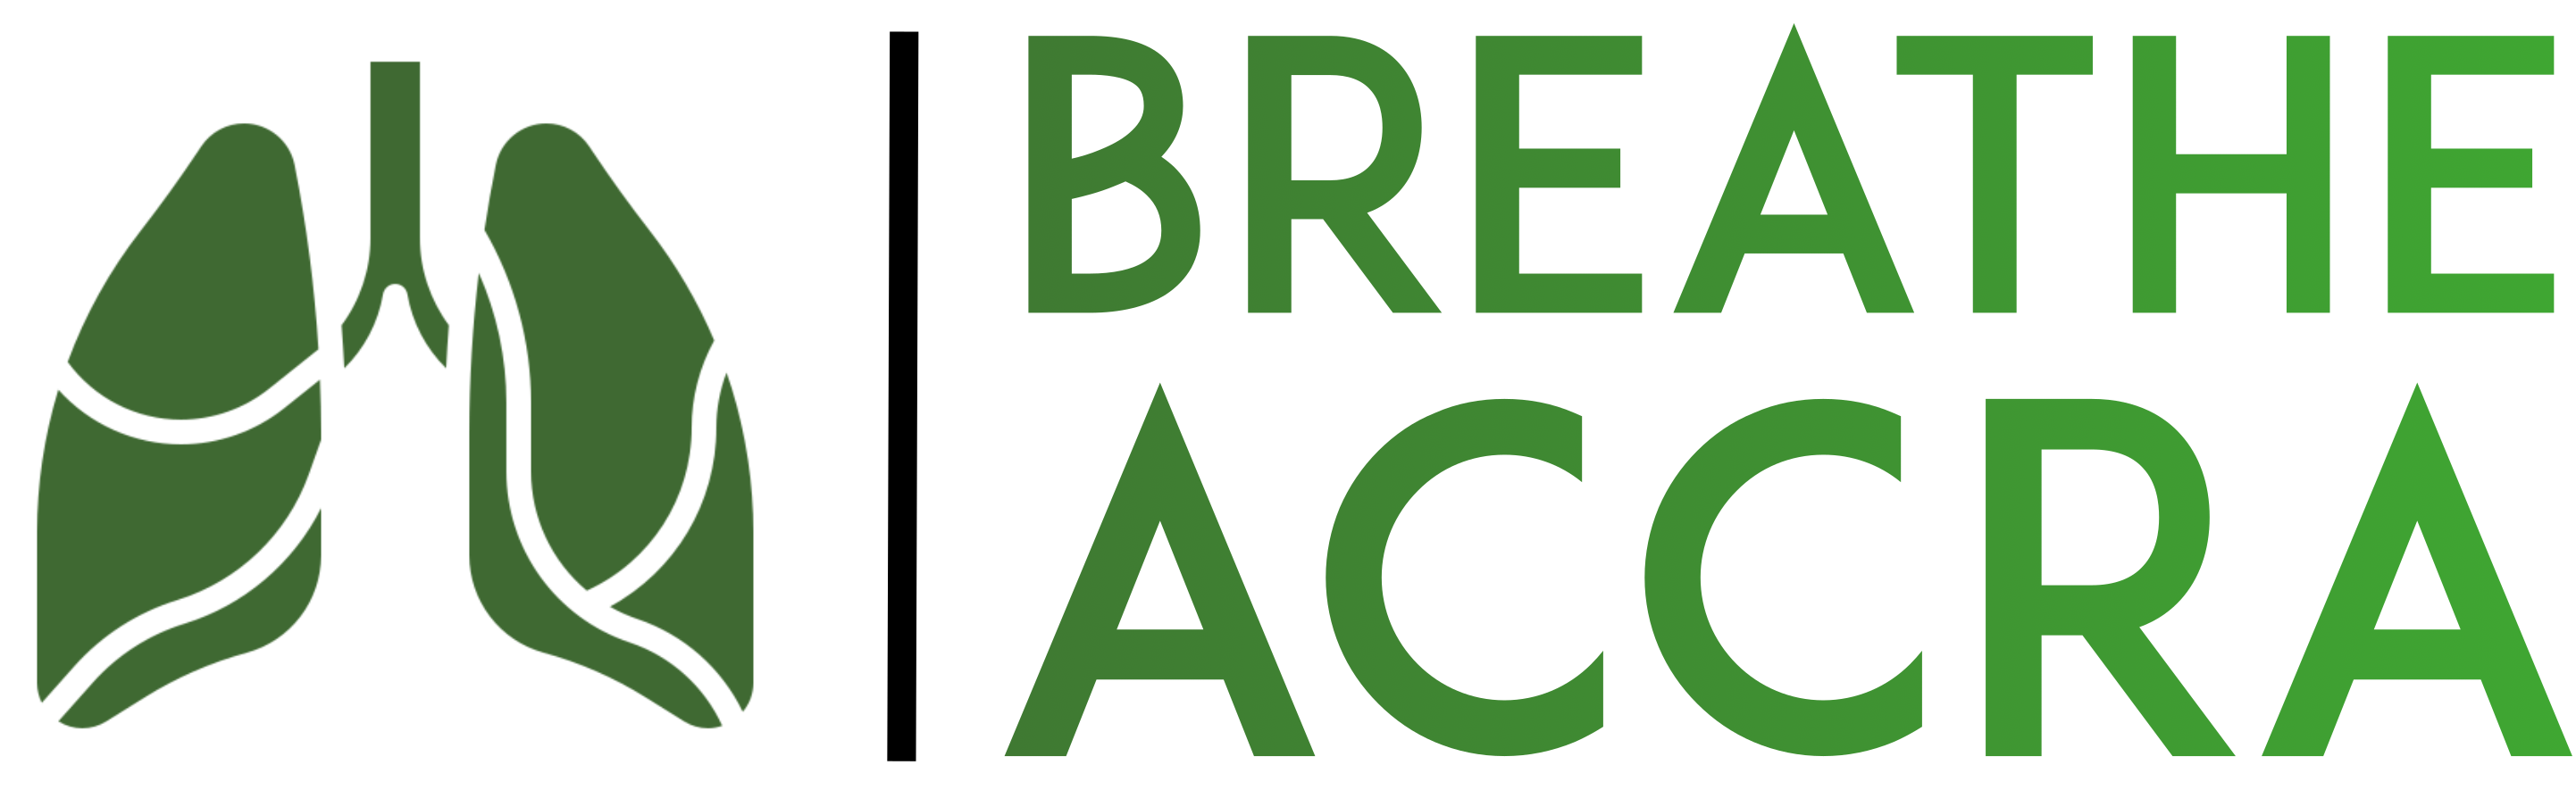 Breathe Accra project logo